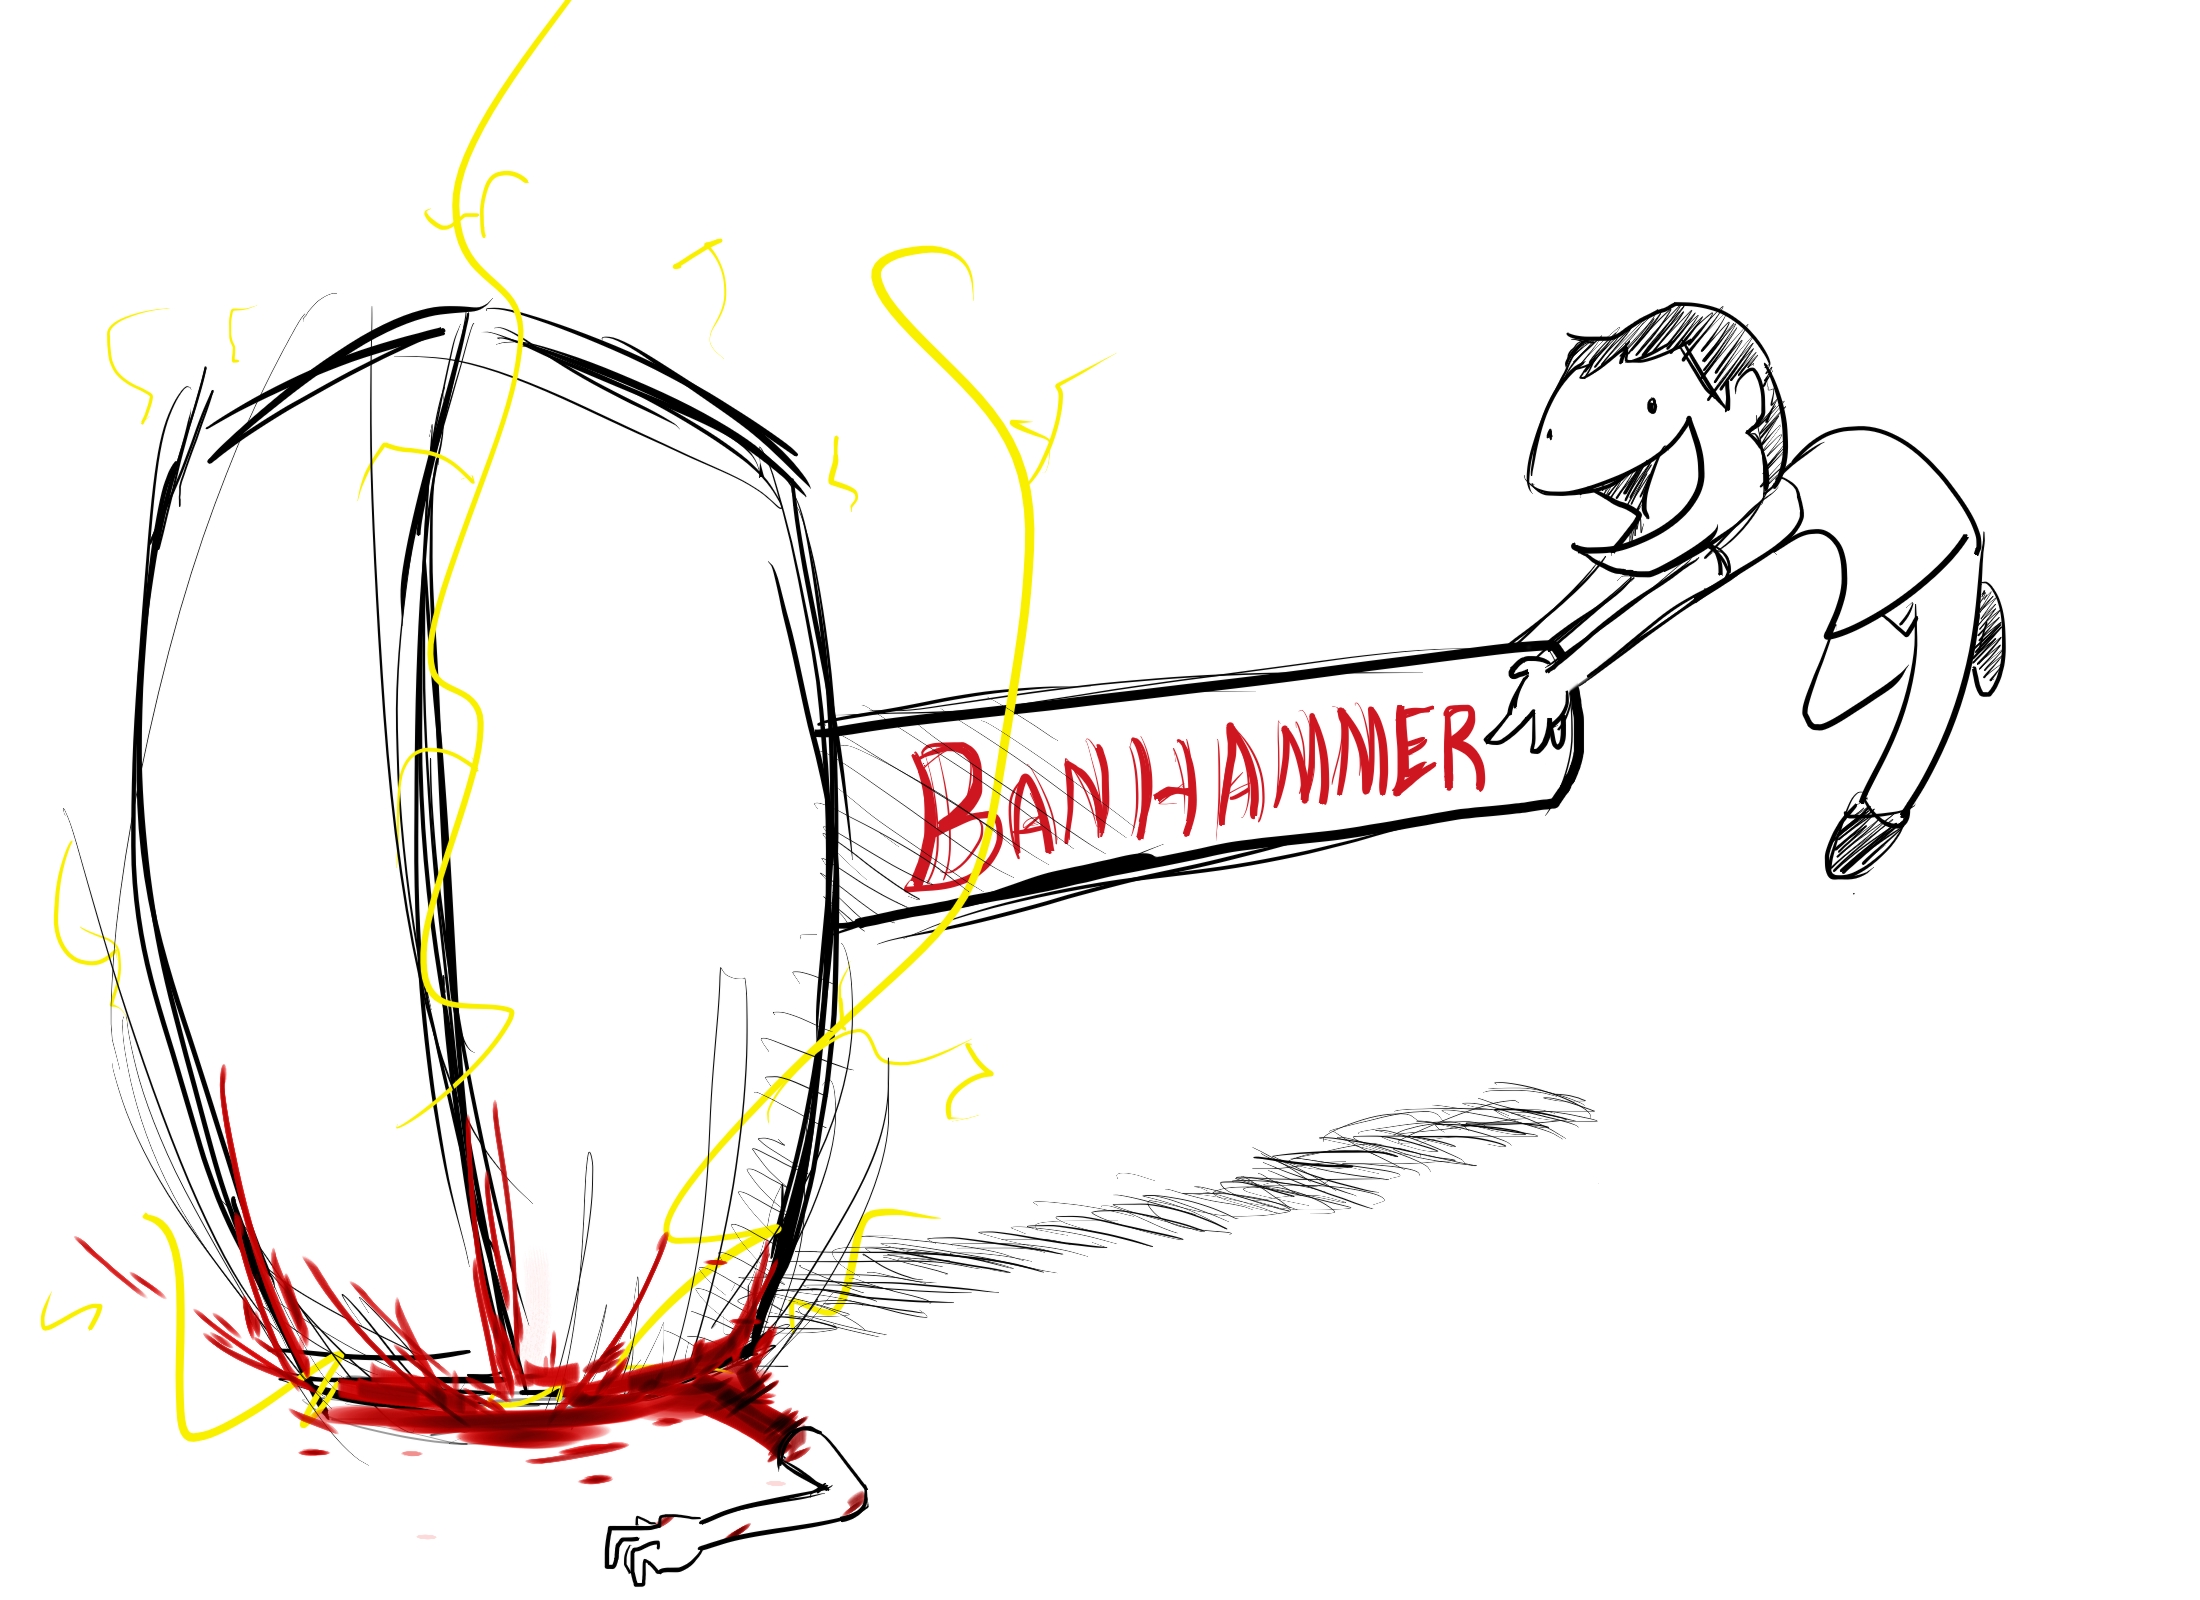 Banhammer_by_AidArmadillo.jpg